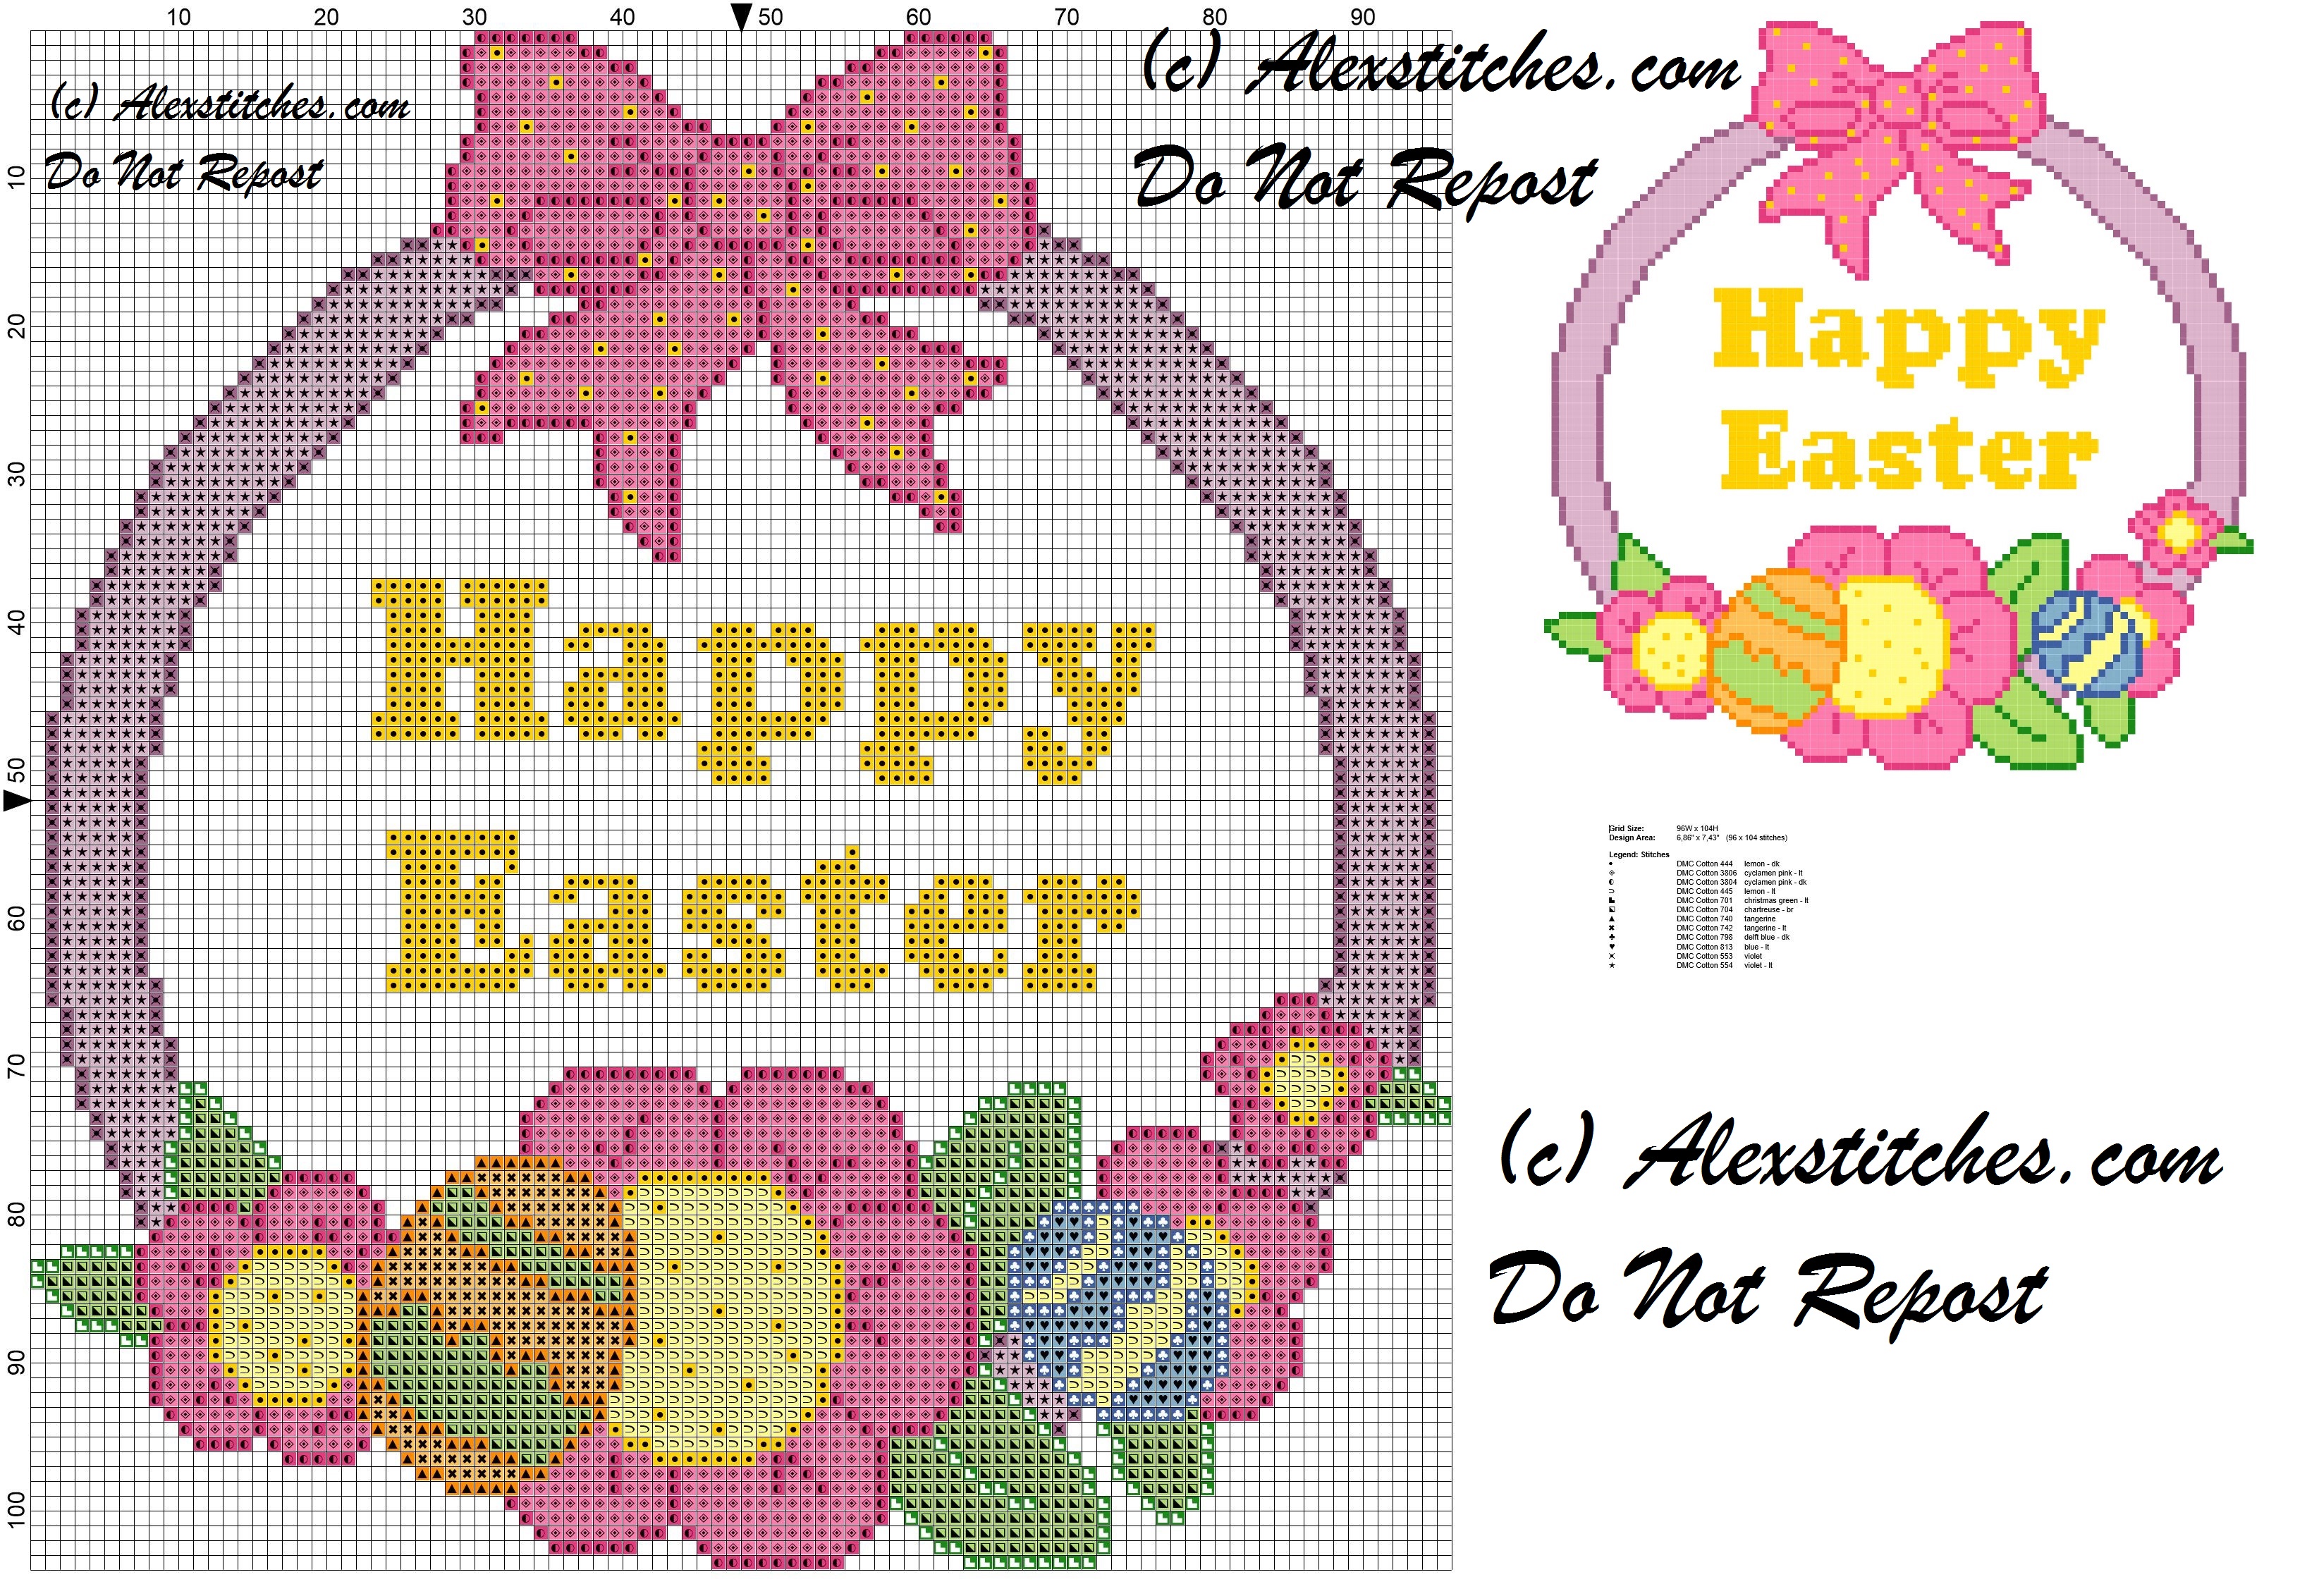 Happy Easter Garland cross Stitch pattern